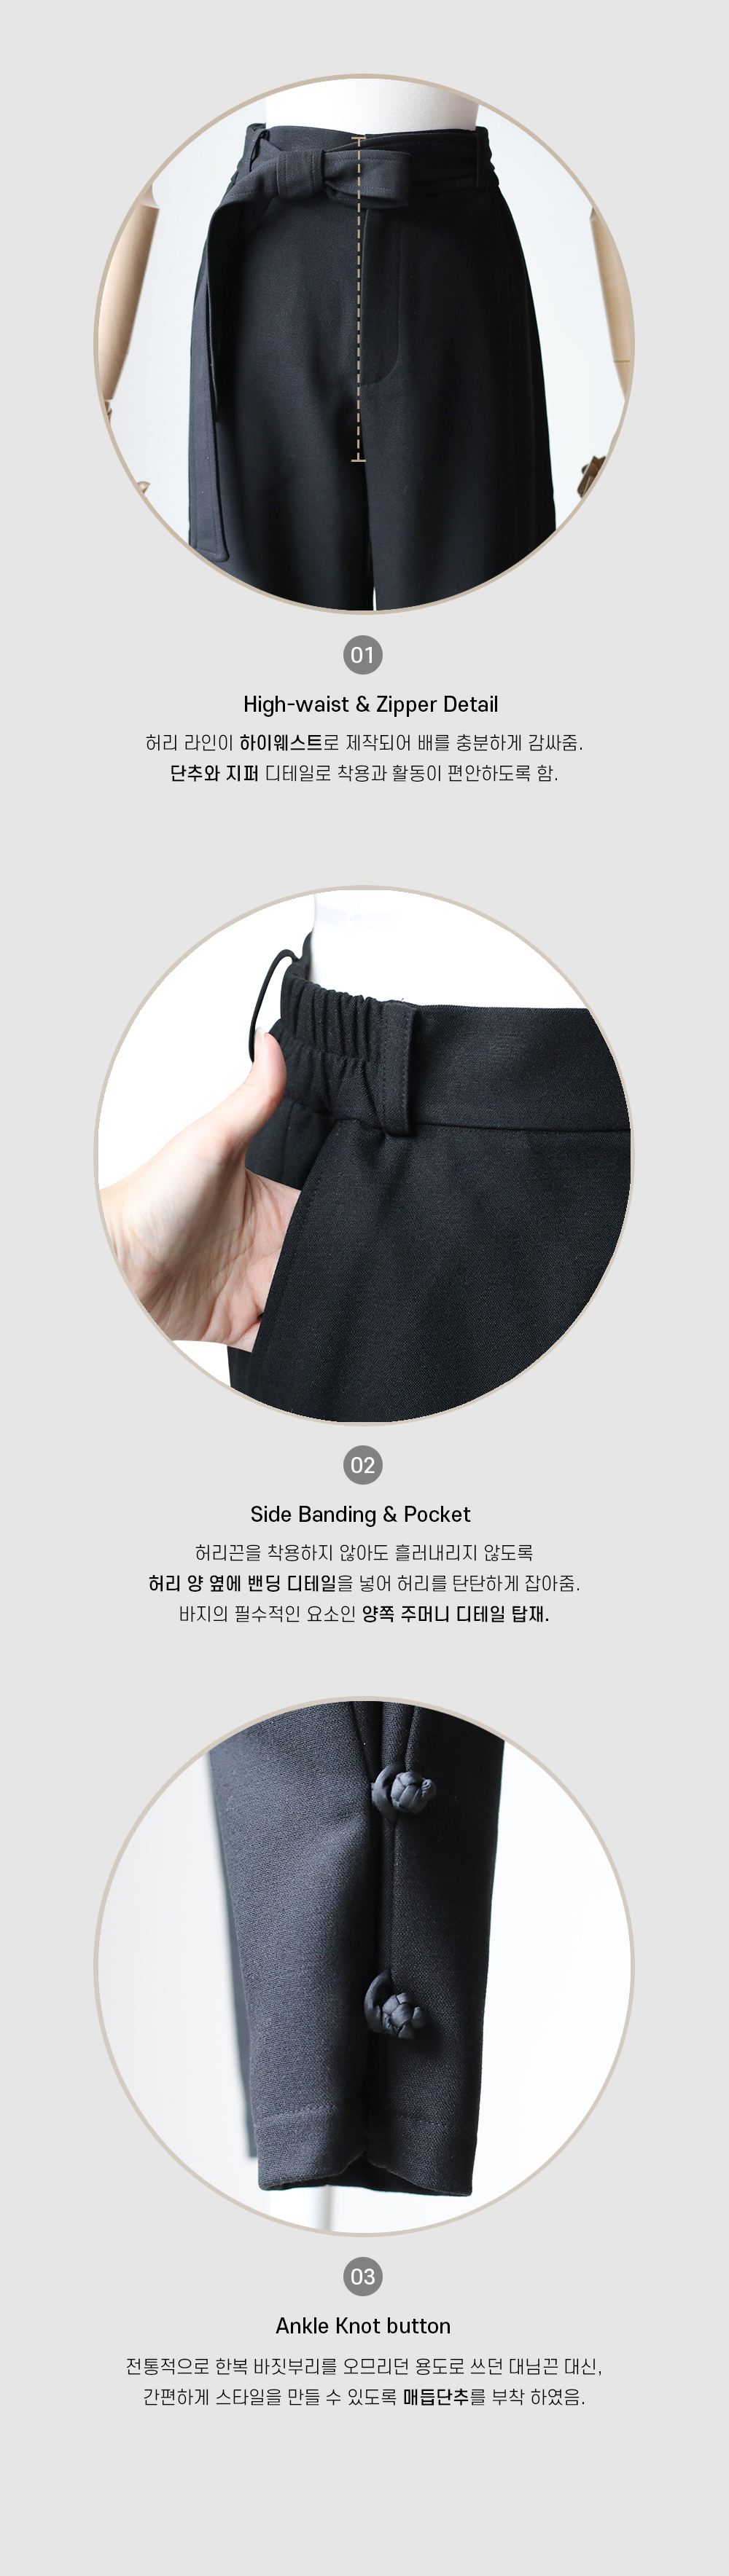 suspenders skirt/pants charcoal color image-S12L2